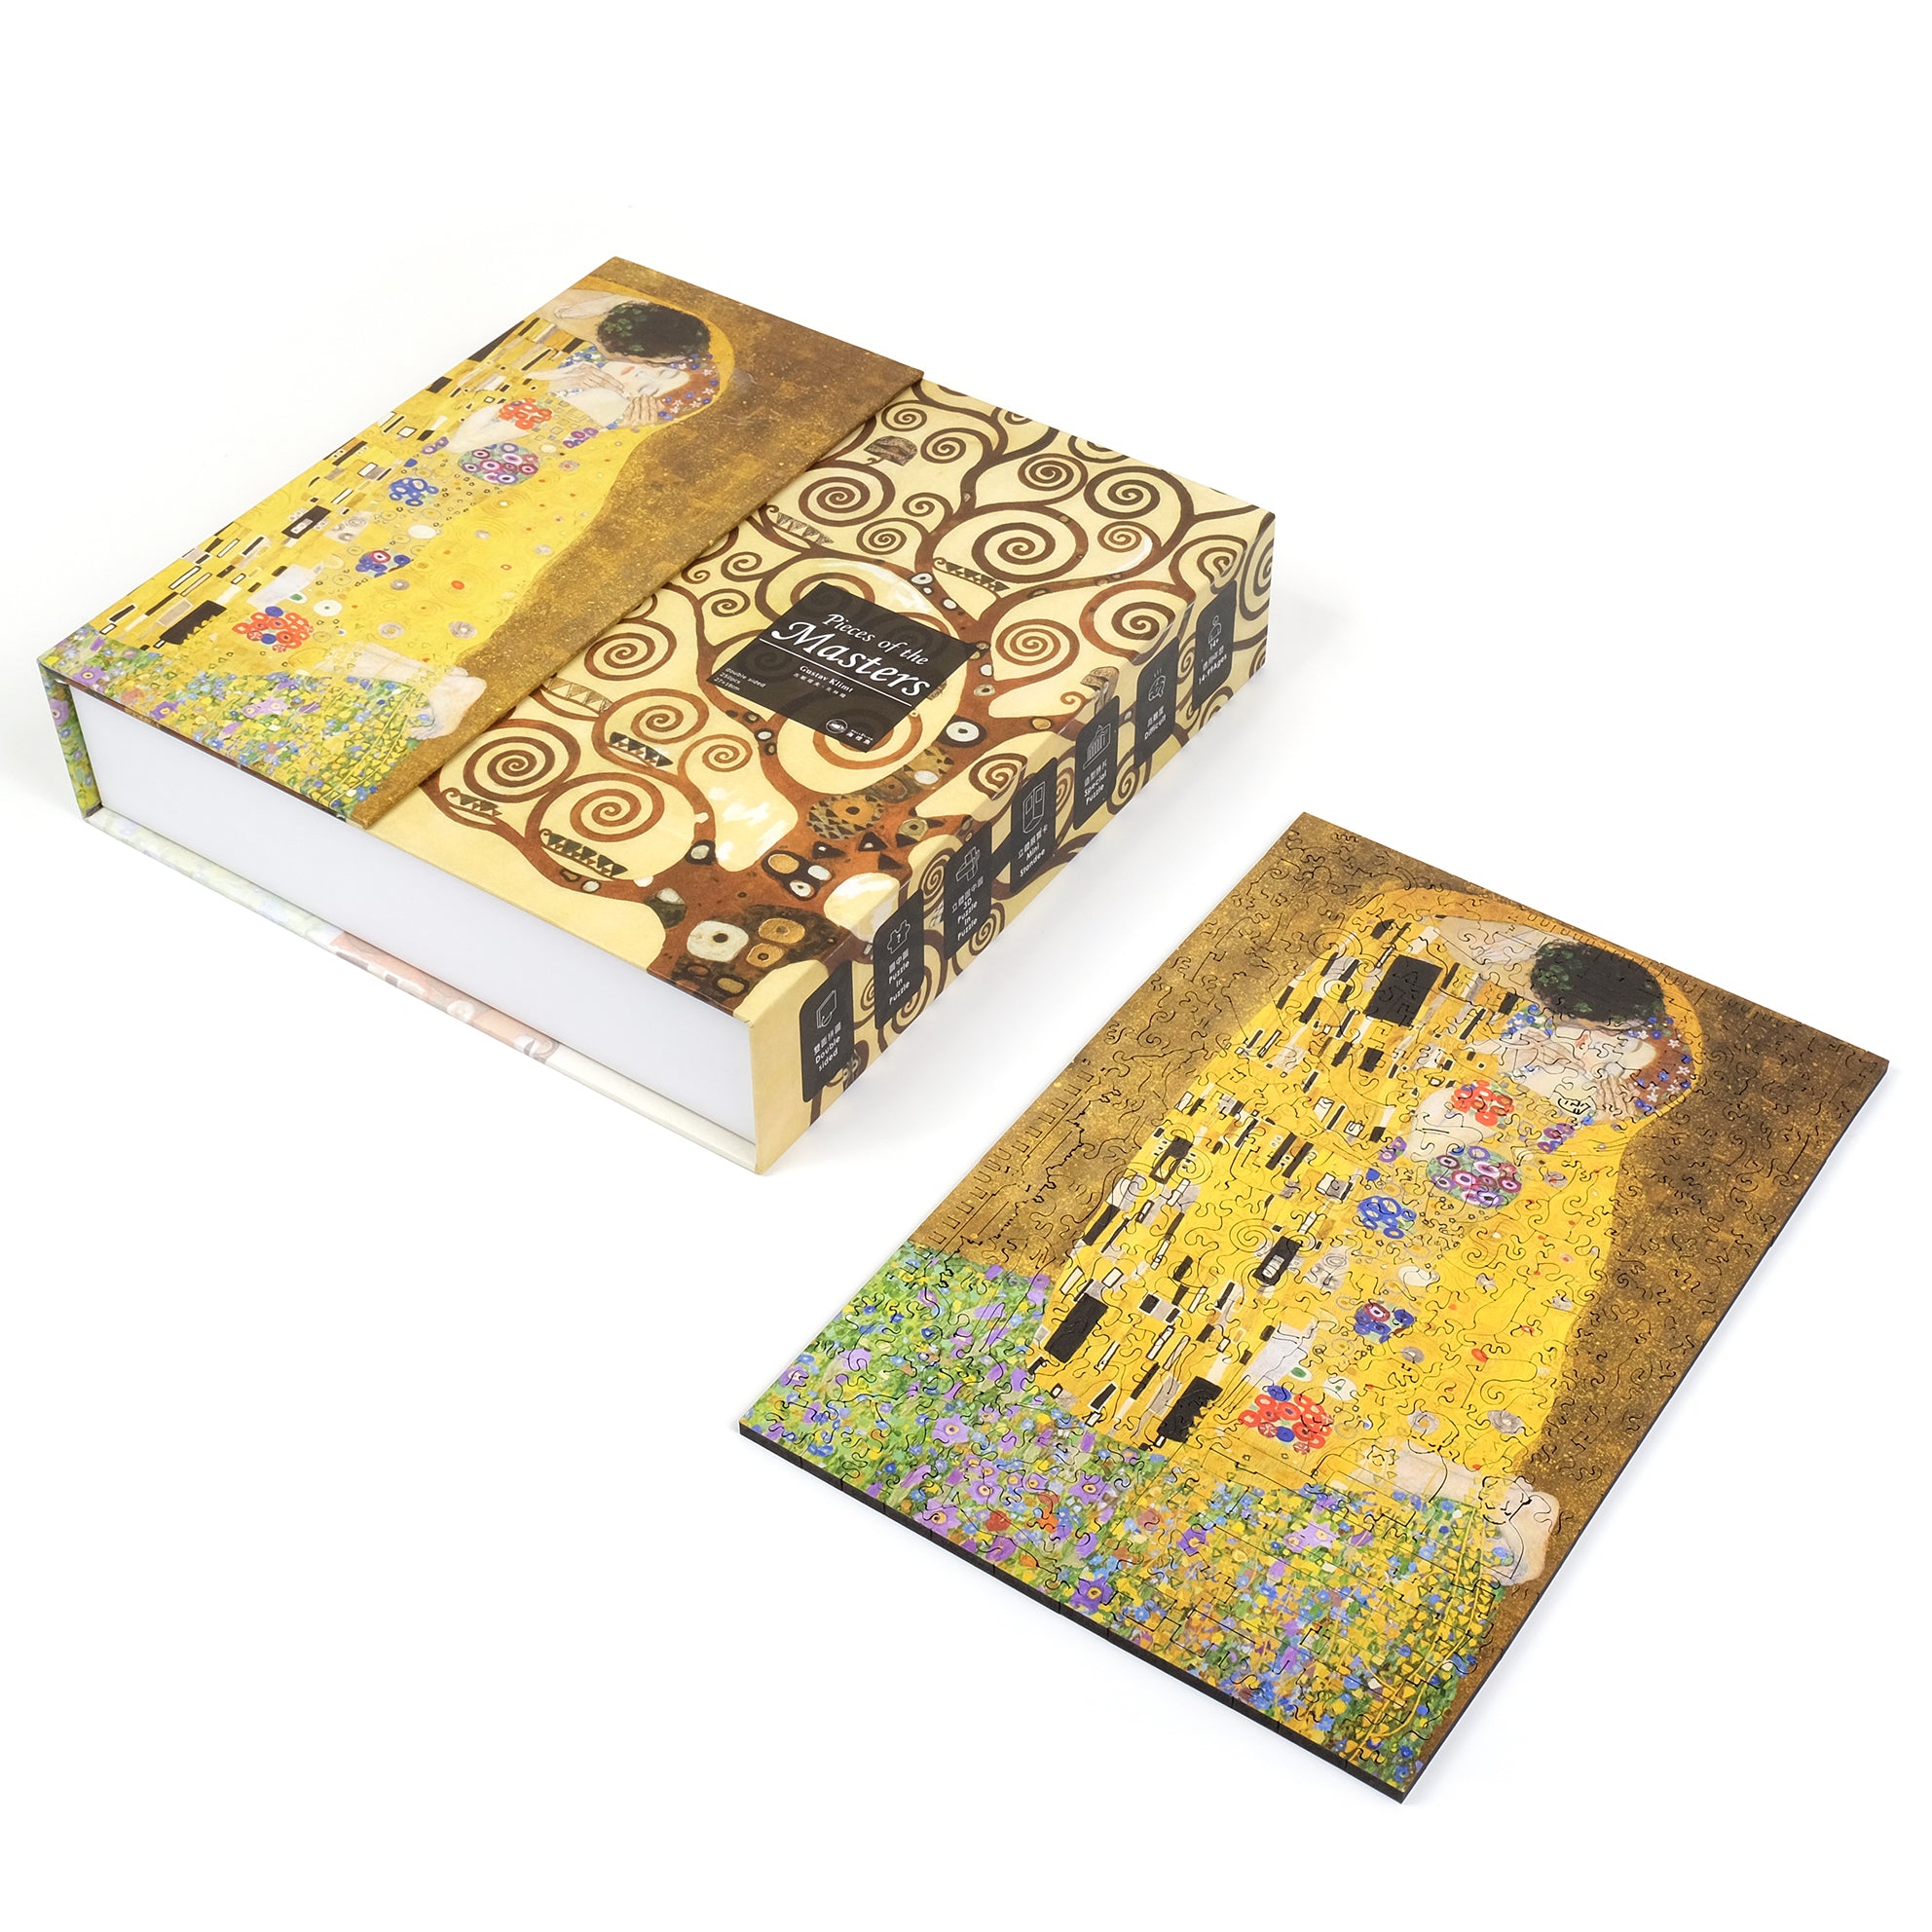 Pieces Of the Masters - Gustav Klimt